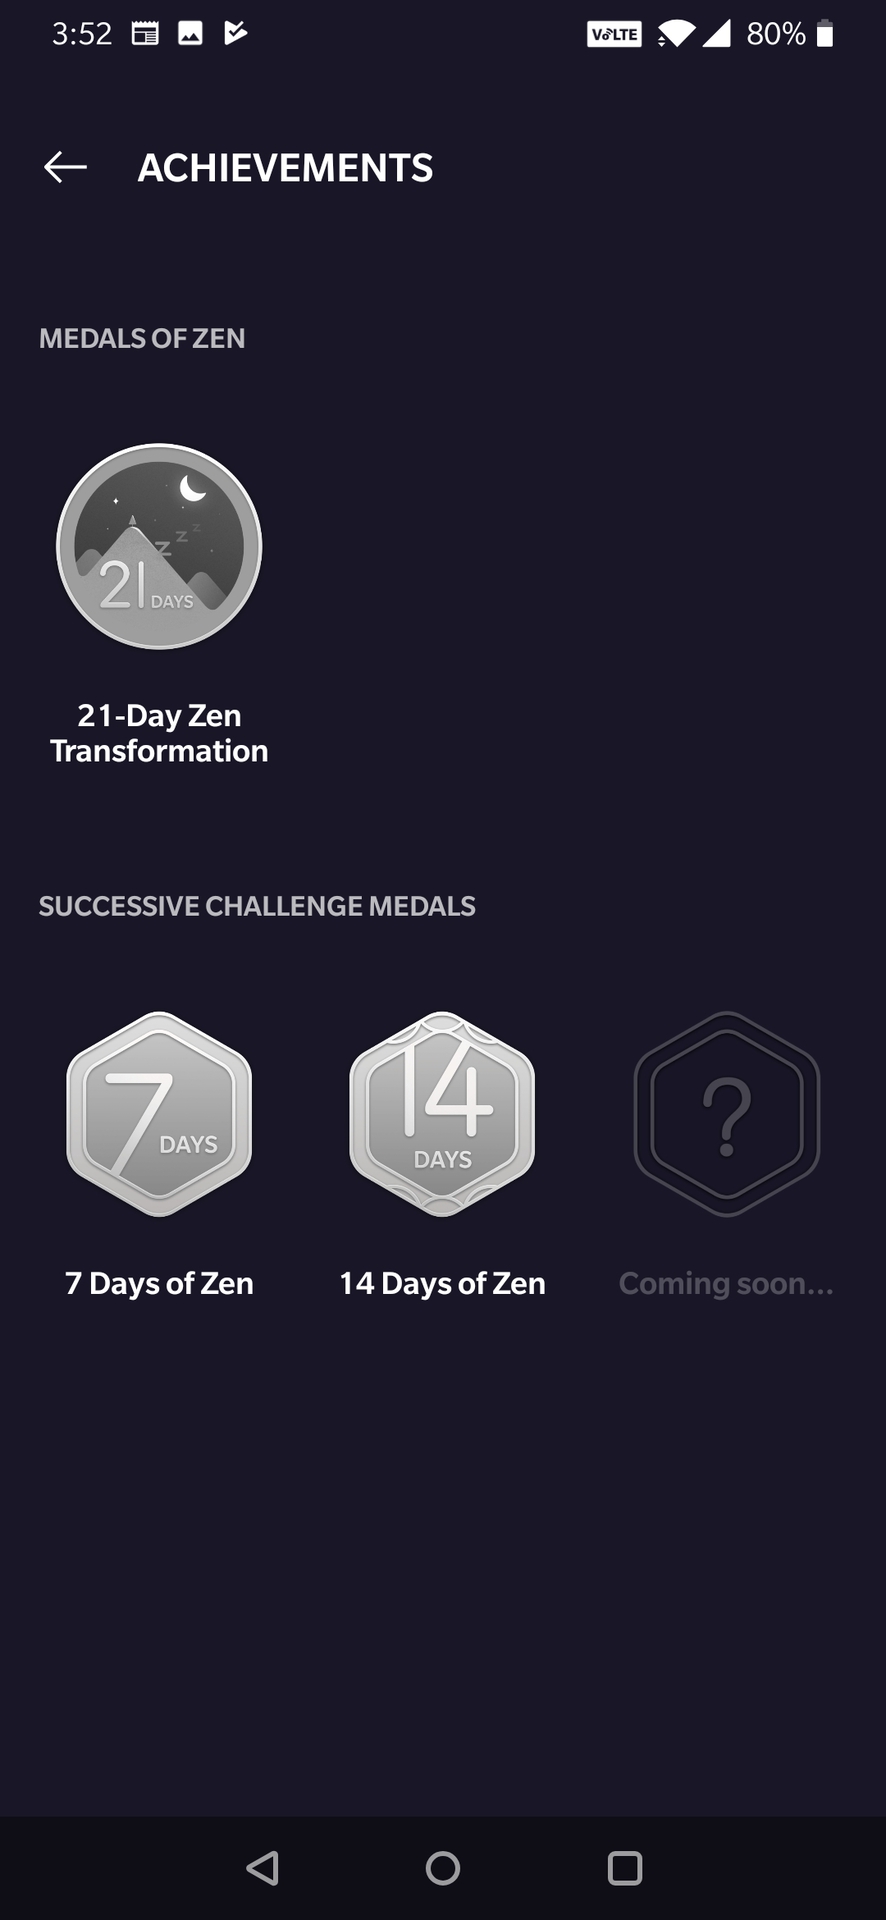 OnePlus Zen mode chievements page